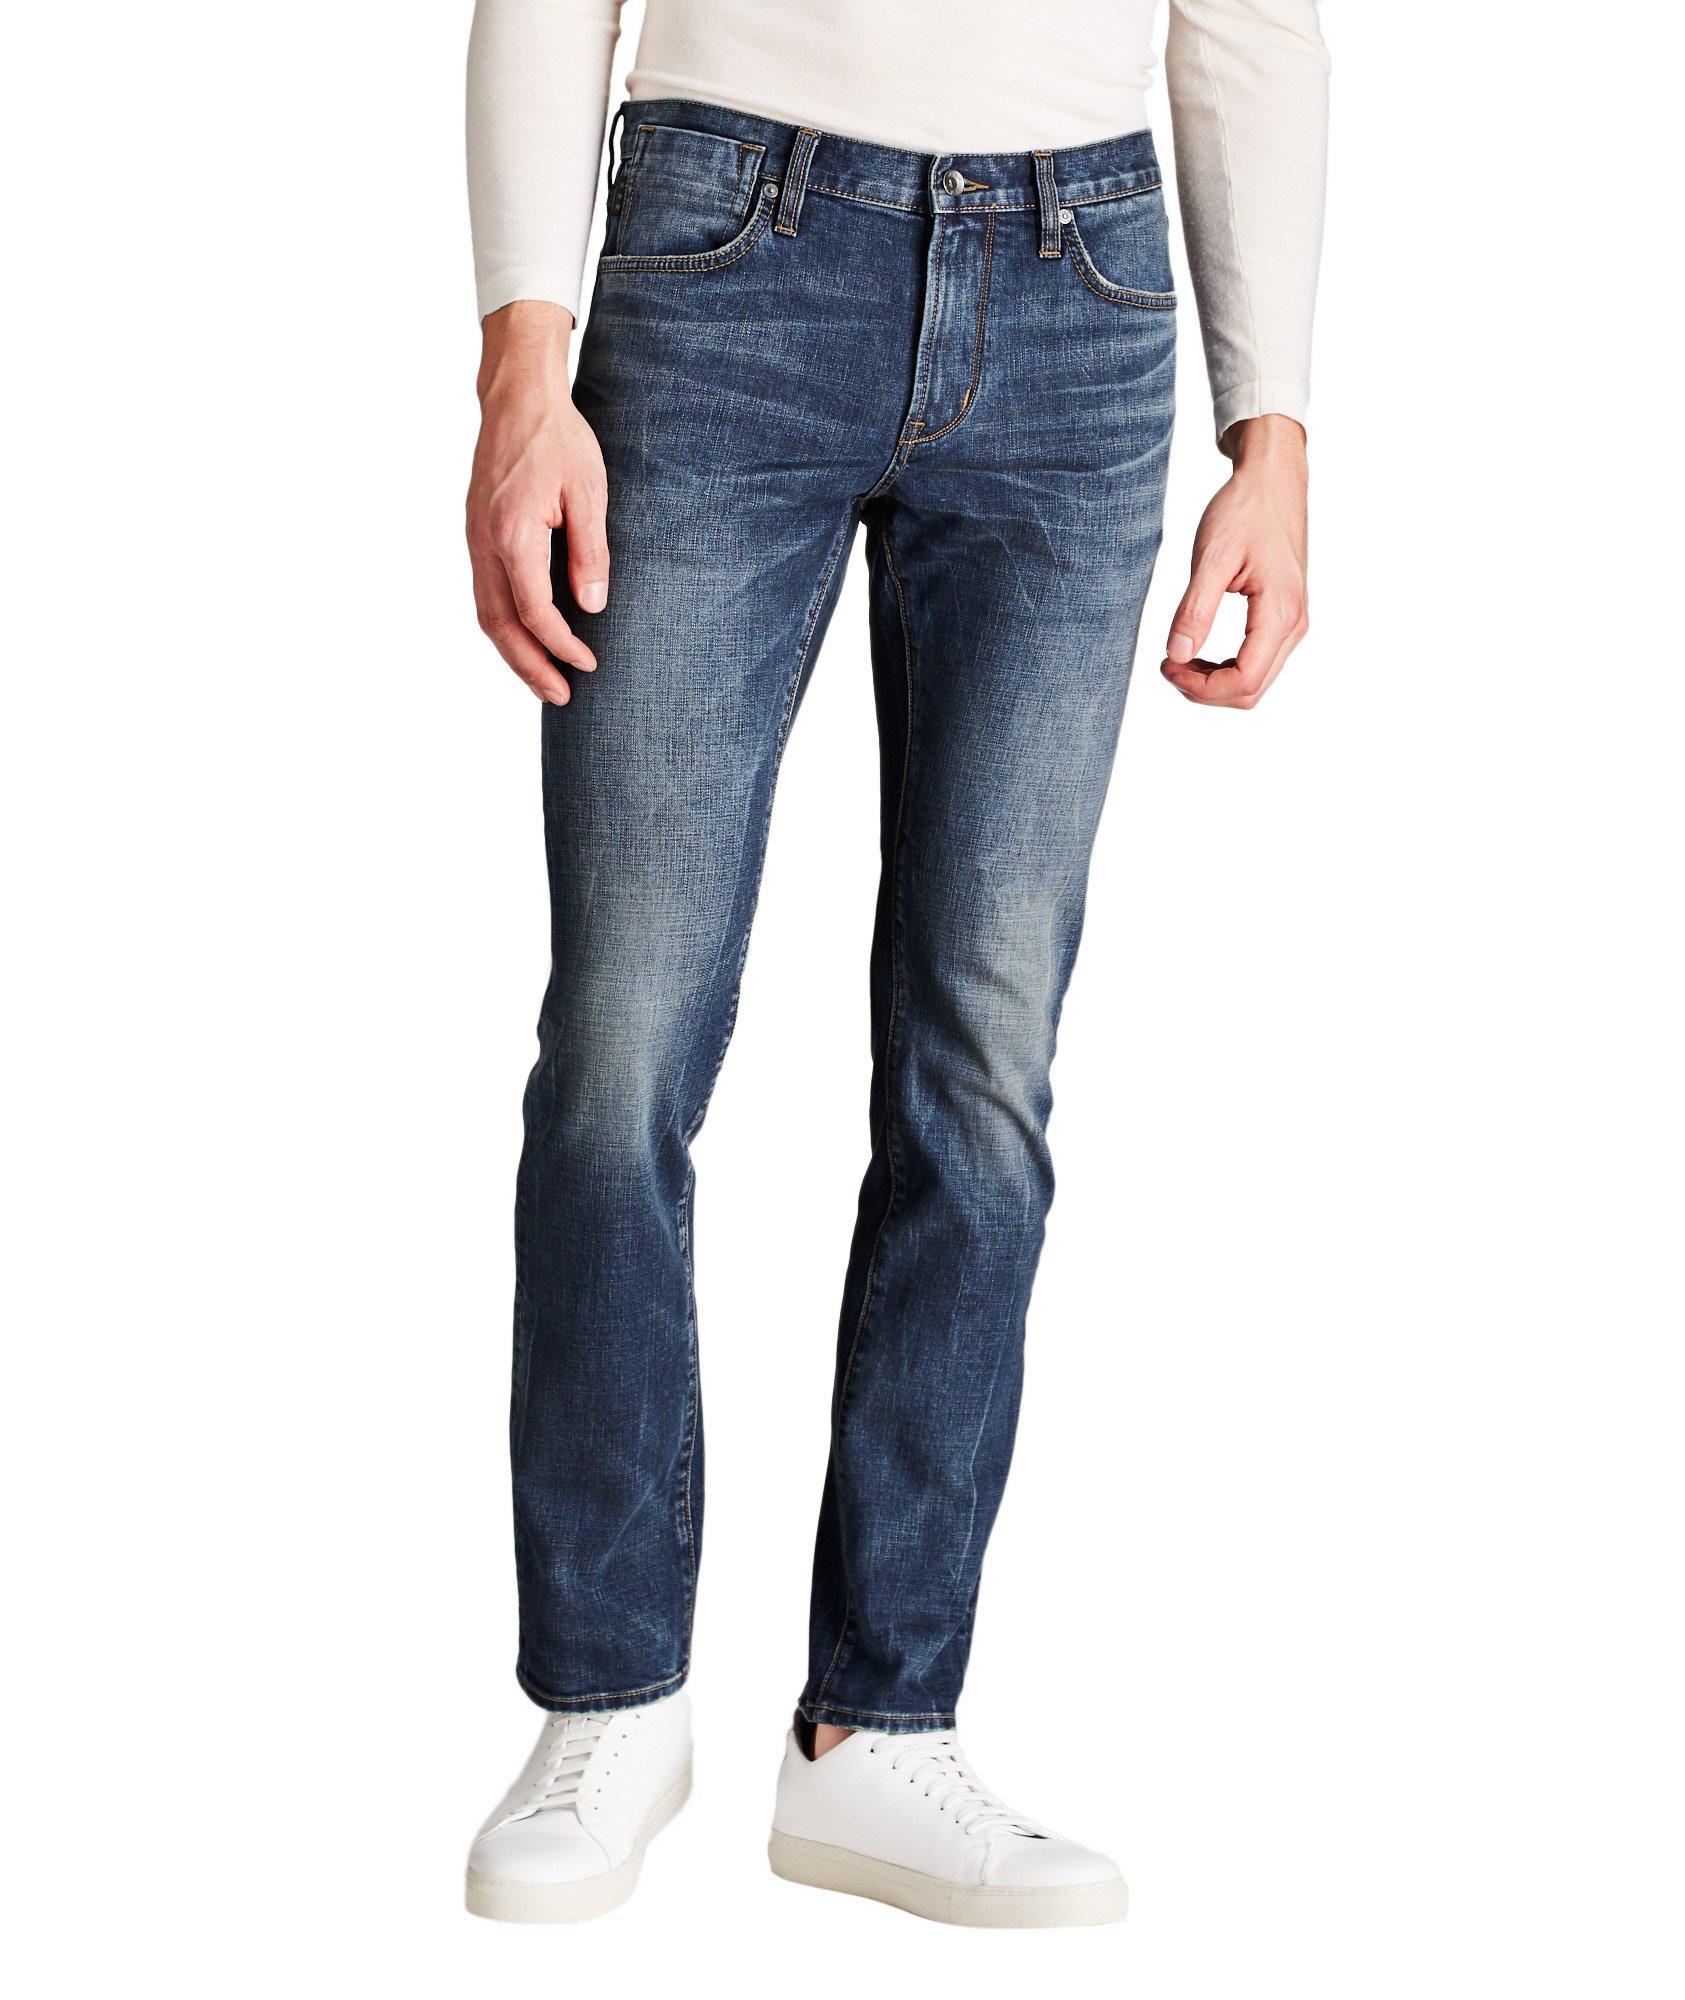 Bowery Slim Straight Jeans image 0